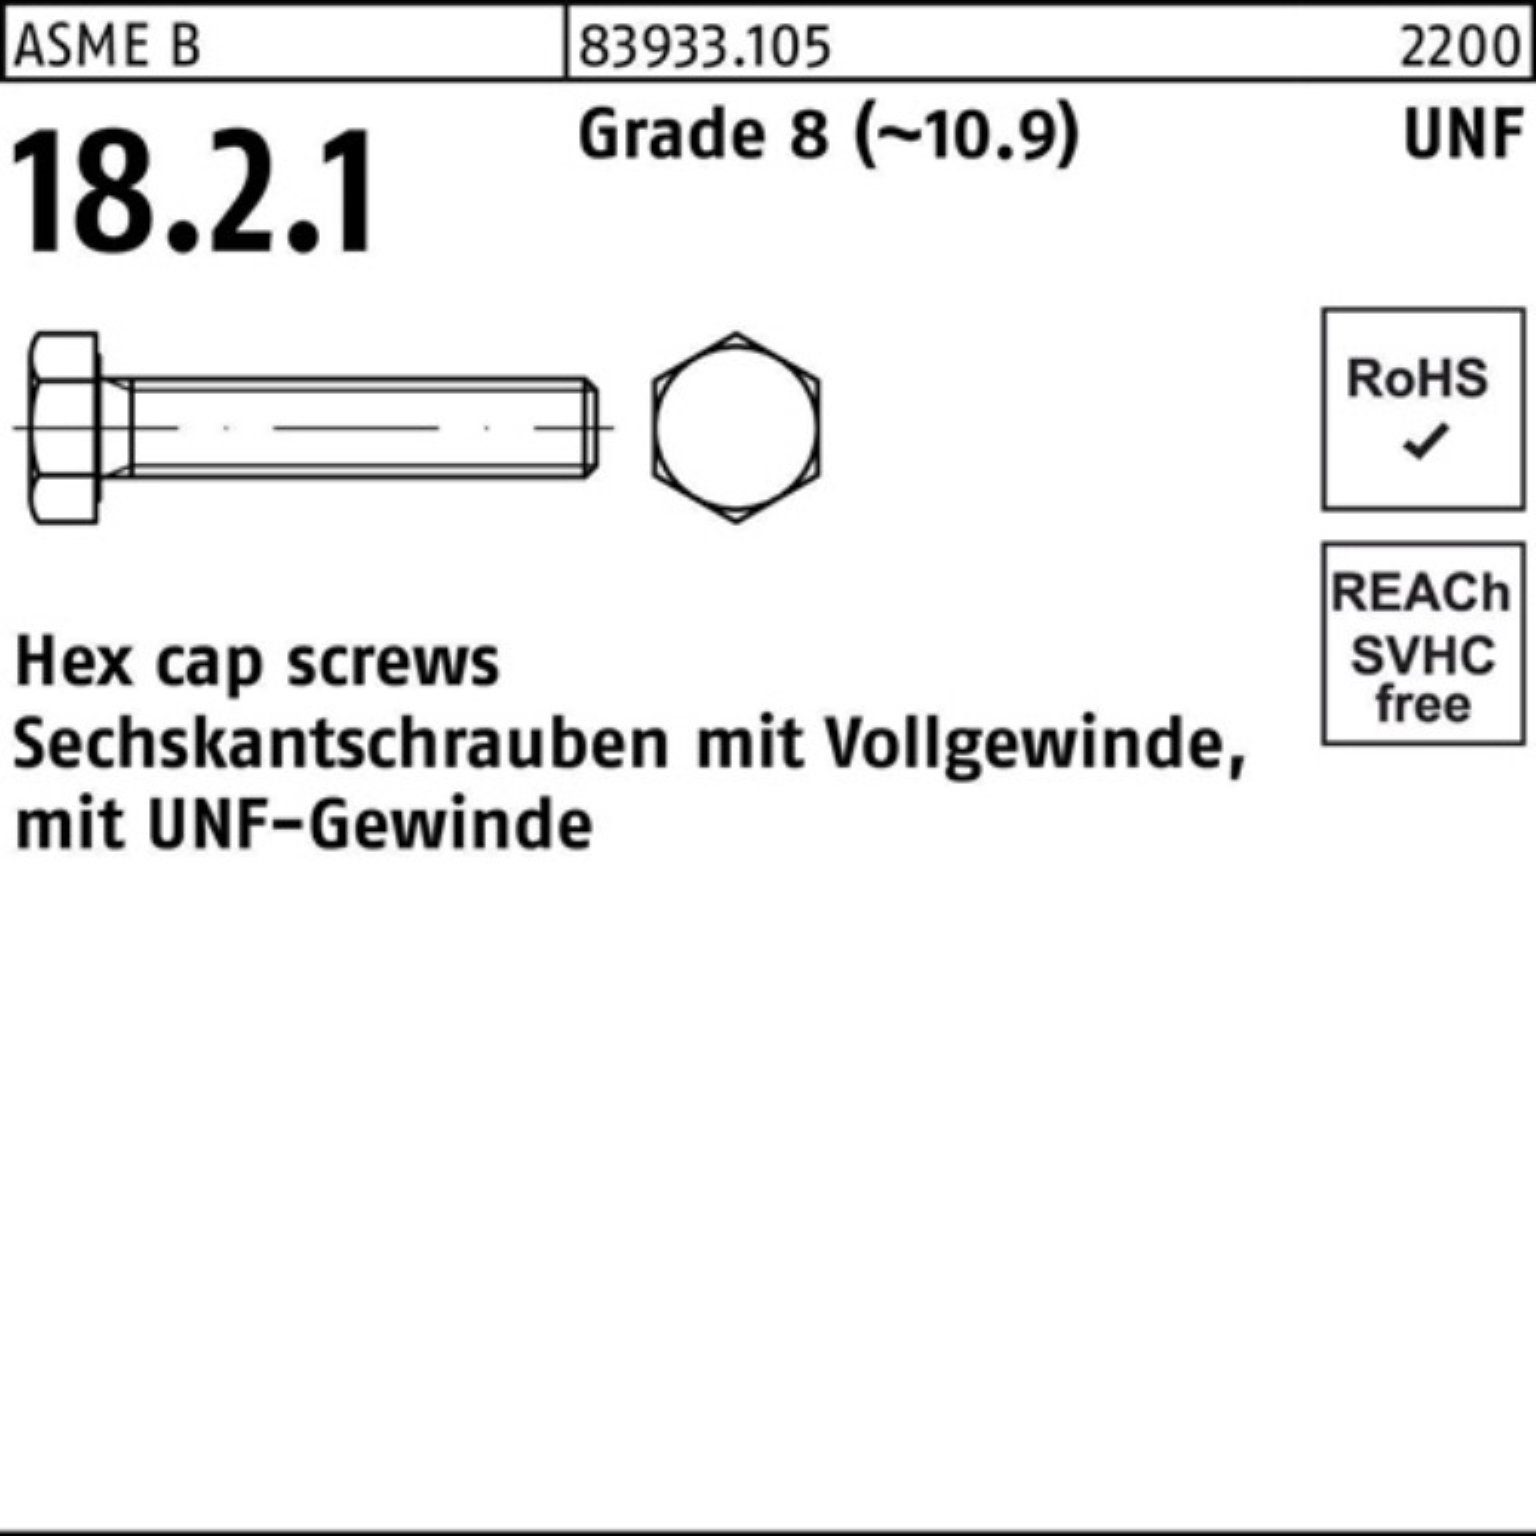 Reyher Sechskantschraube 100er Pack Sechskantschraube R 83933 UNF-Gewinde VG 3/8x 5/8 Grade 8